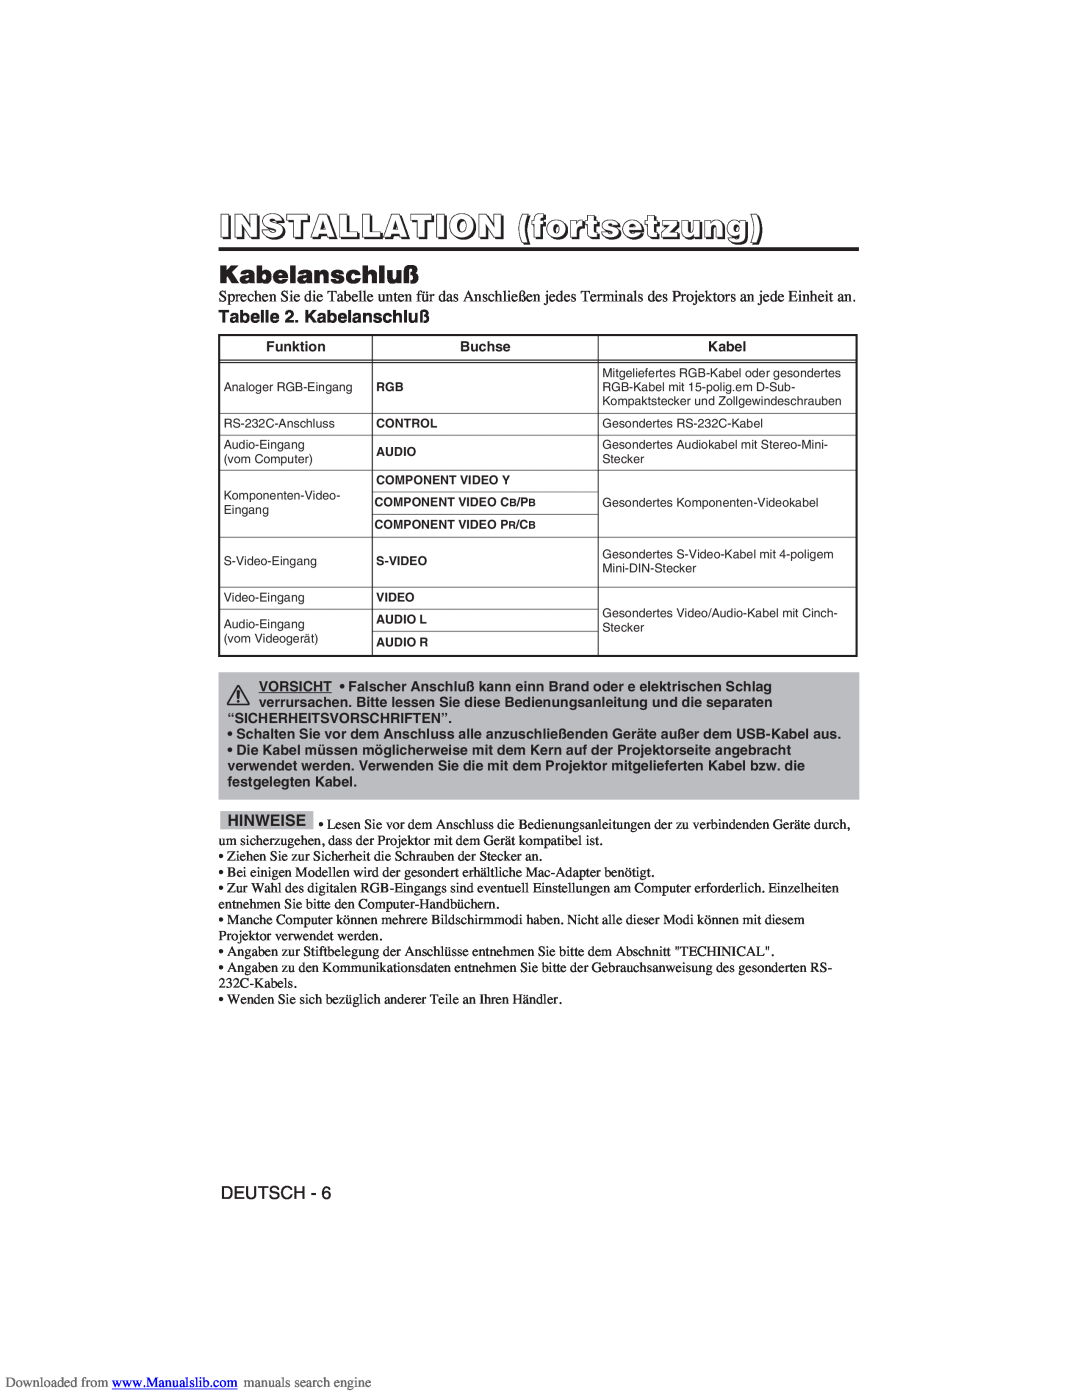 Hitachi CP-X275W user manual INSTALLATION fortsetzung, Tabelle 2. Kabelanschluß 